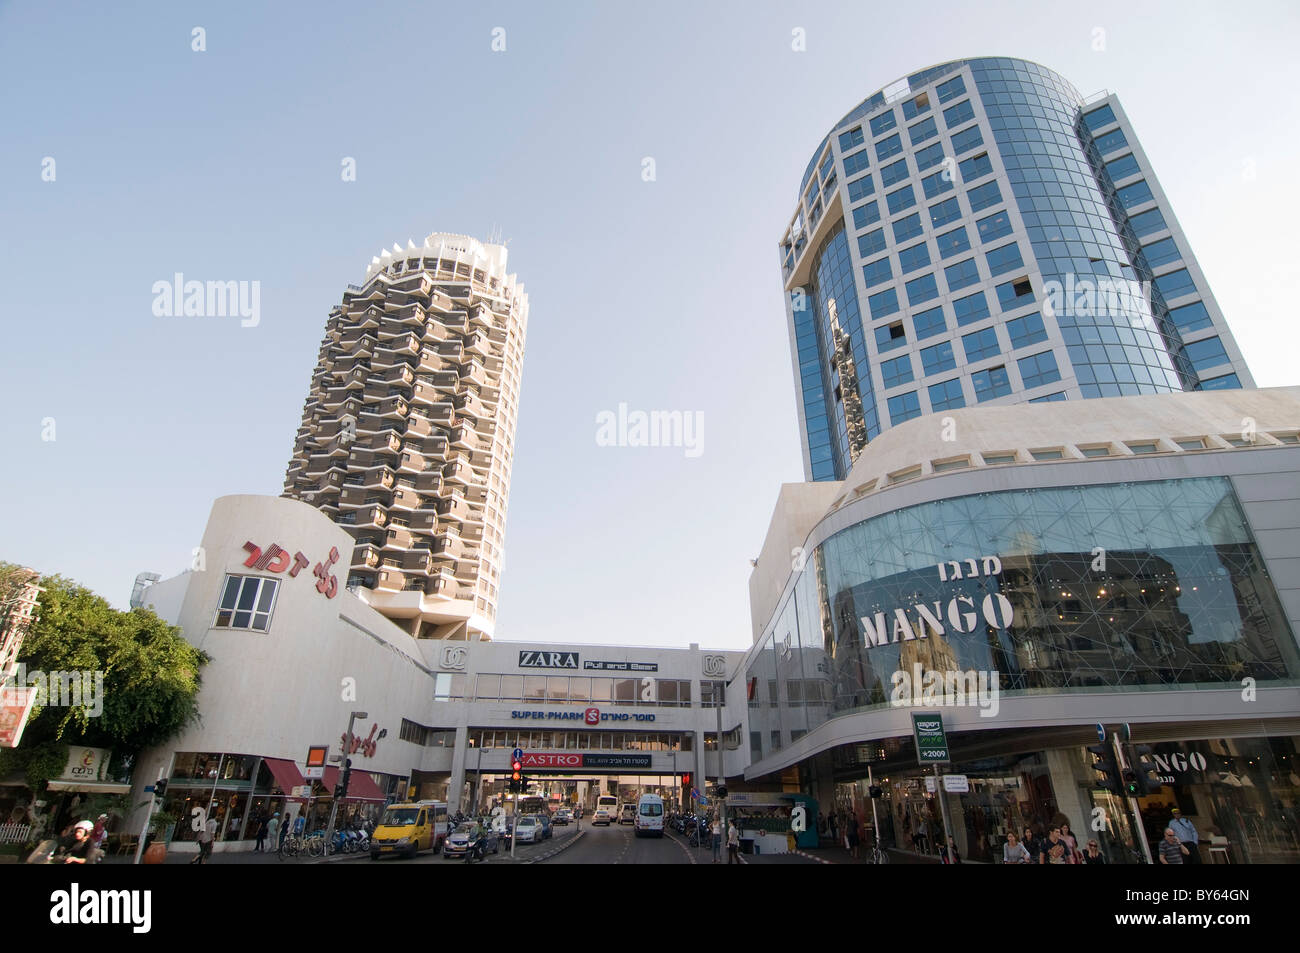 Israele, Tel Aviv Dizengoff center shopping mall e torre residenziale Foto  stock - Alamy